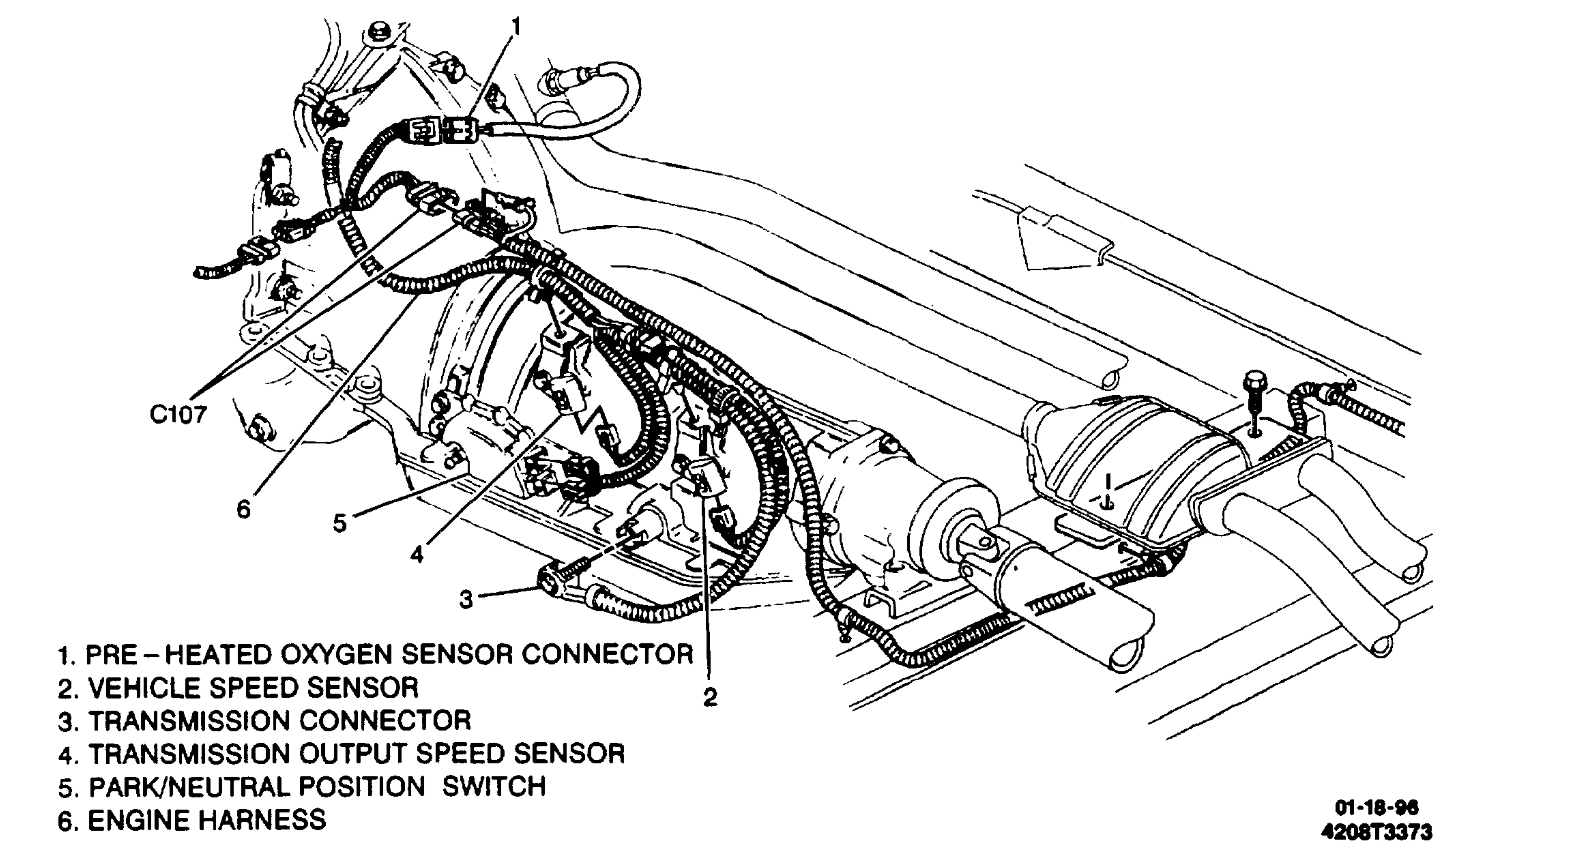 Vehicle Speed Sensor  Where Is The Vehicle Speed Sensor